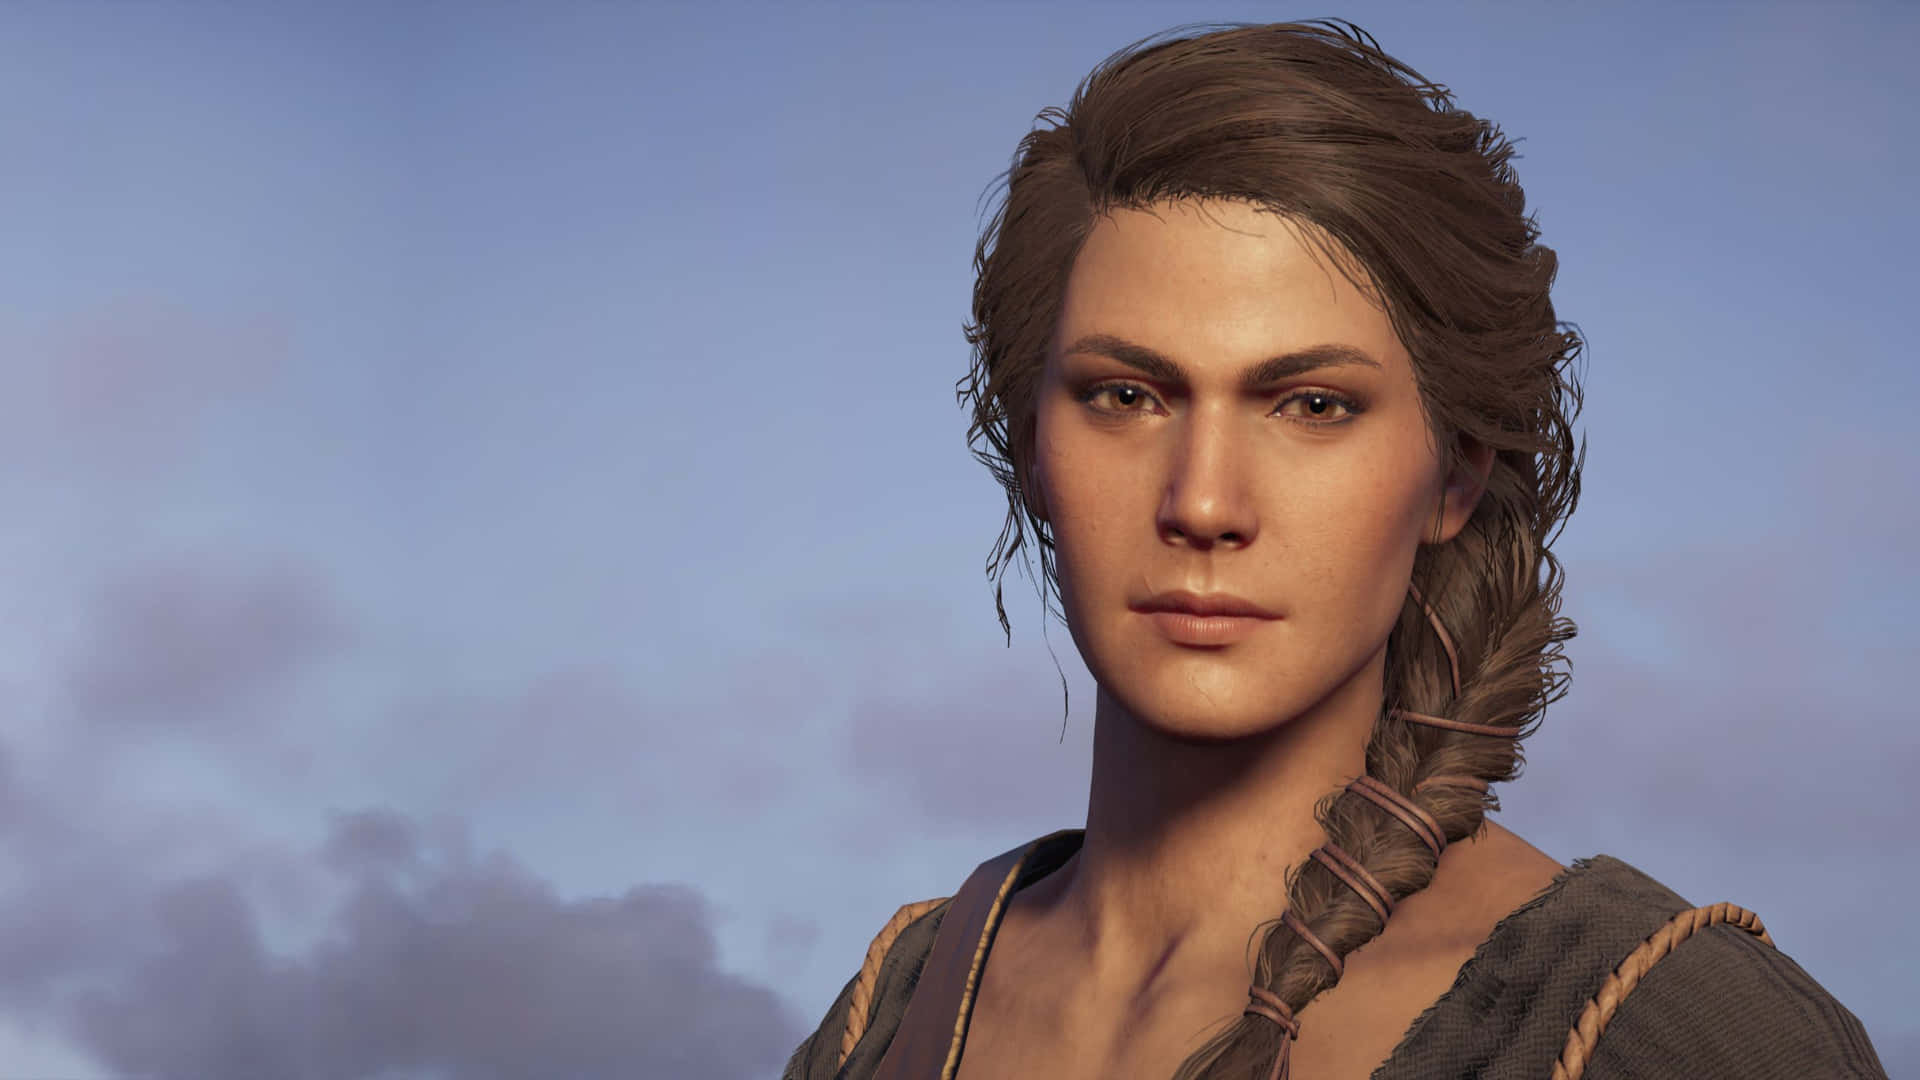 Kassandra Eagle Bearer 1440p Assassin's Creed Odyssey Background